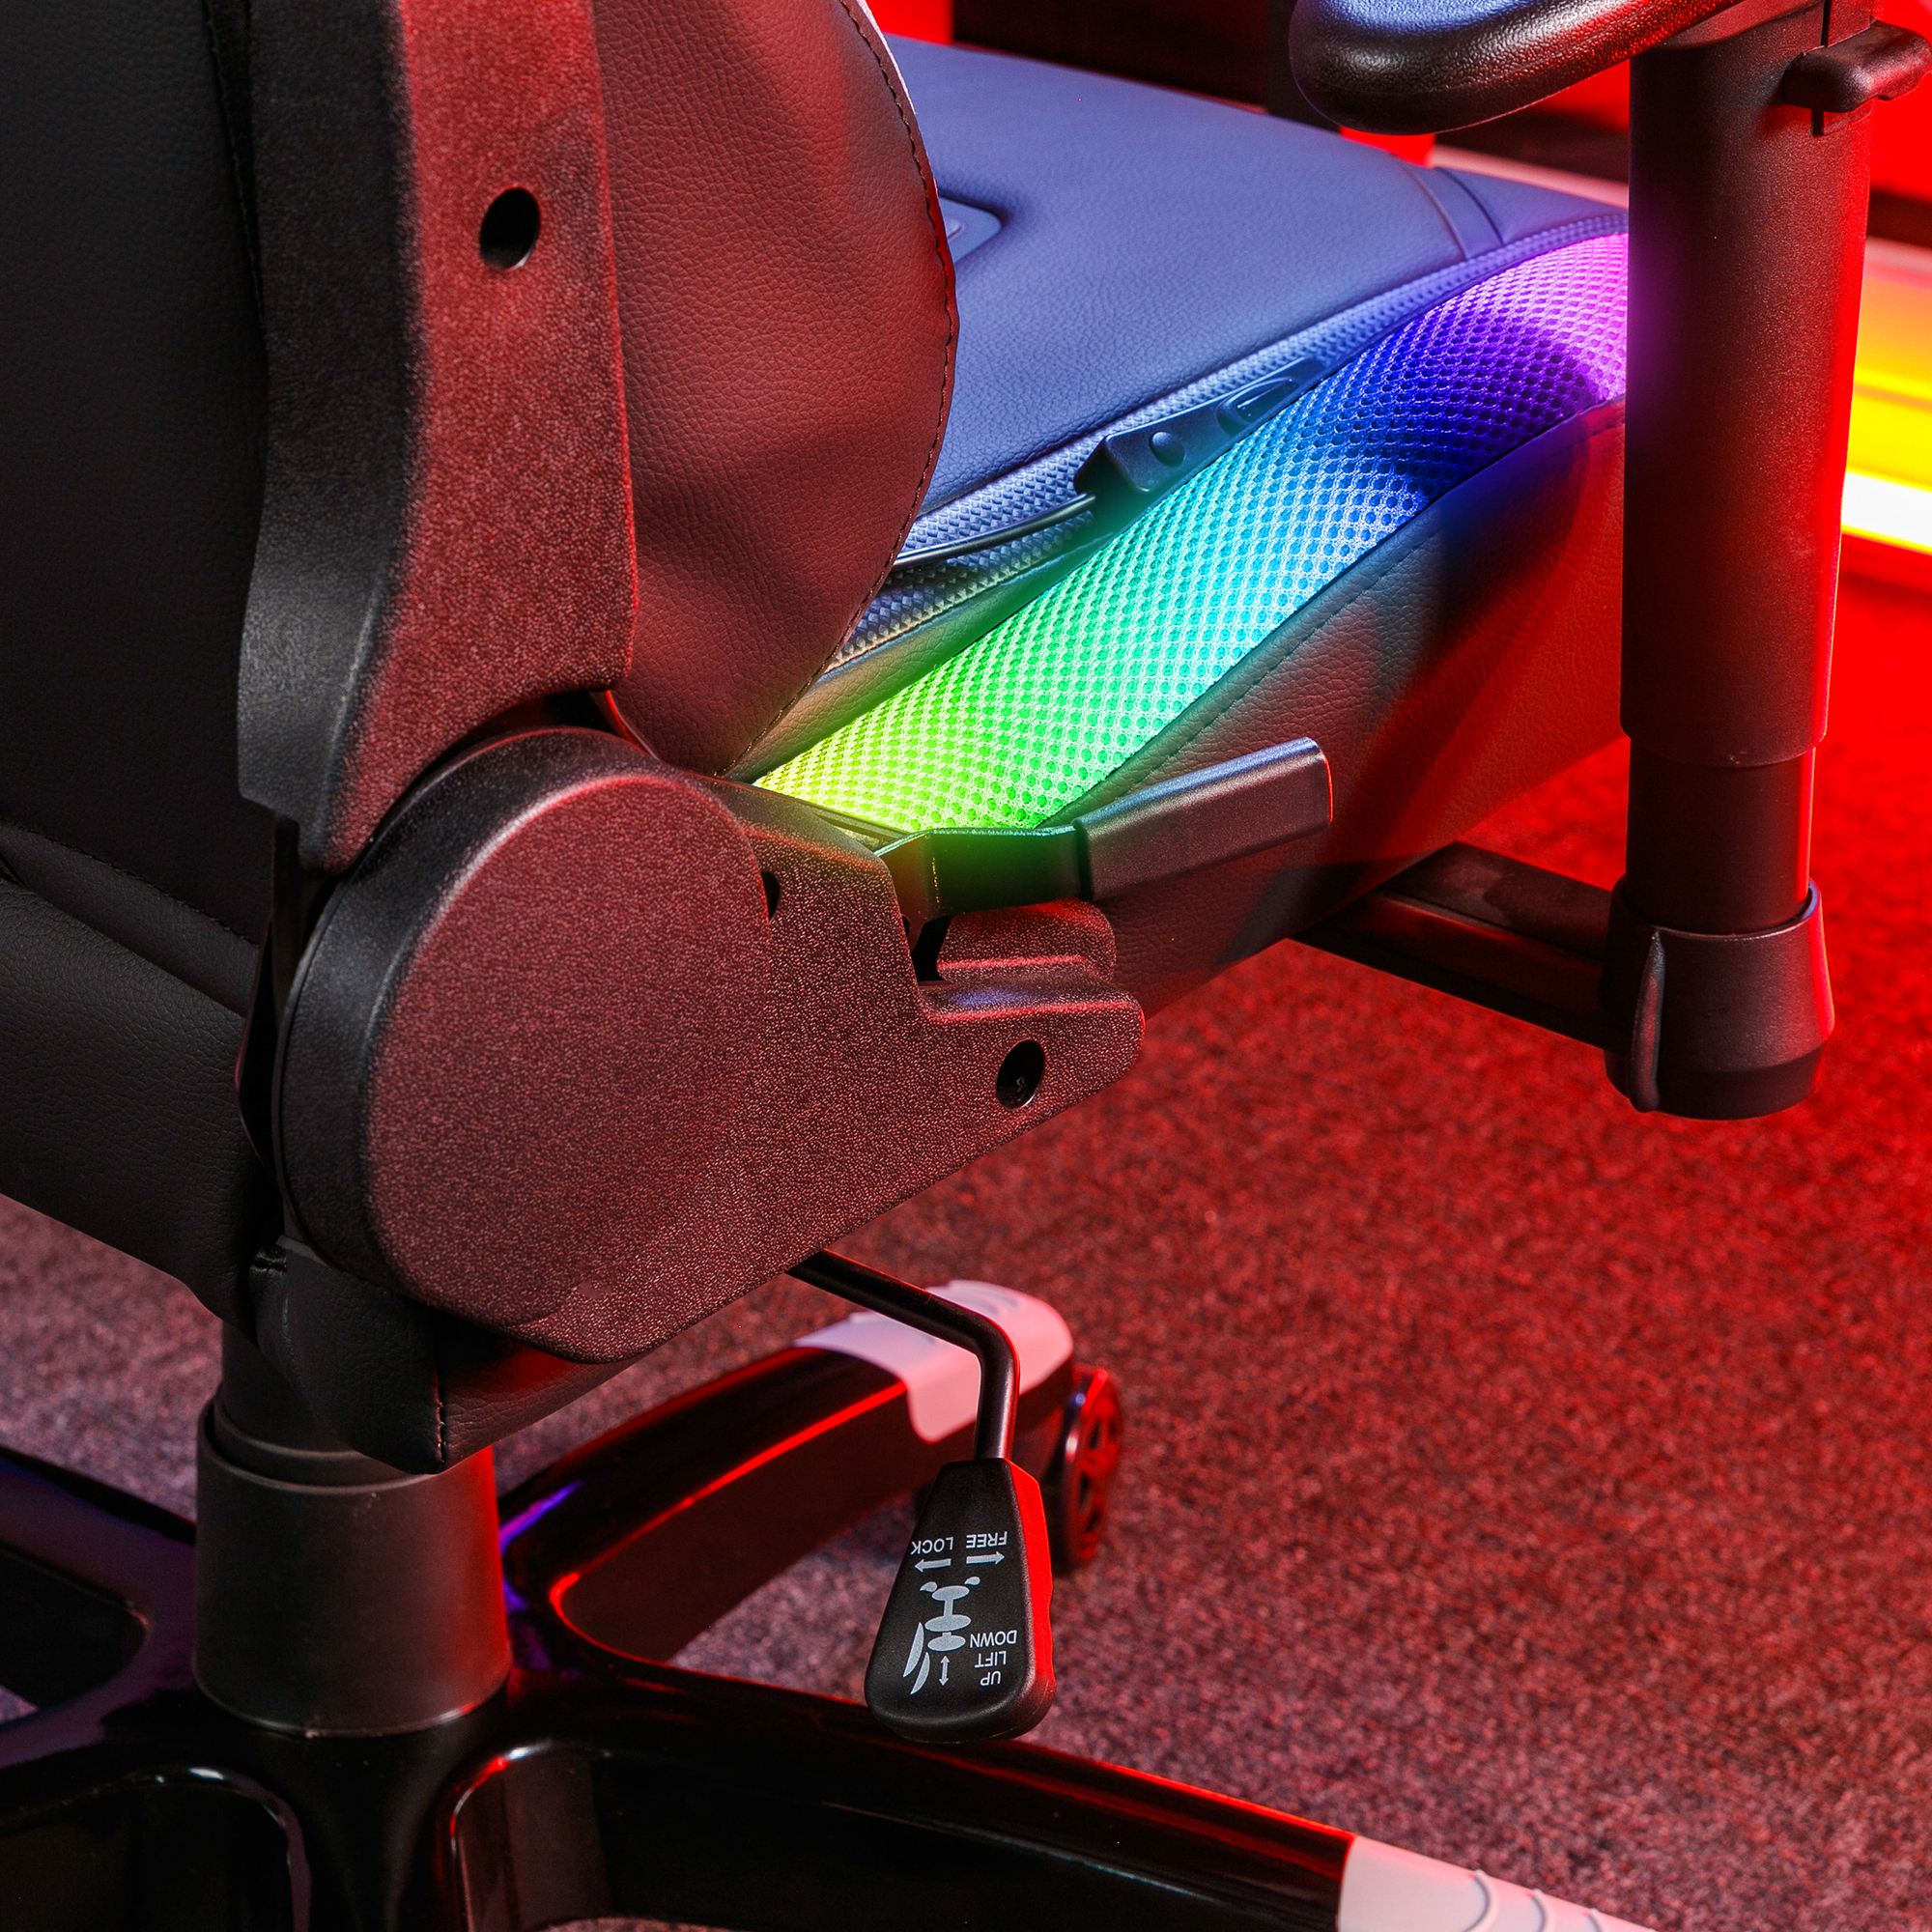 X ROCKER Schwarz RGB Agility Stuhl, RGB Compact Gaming